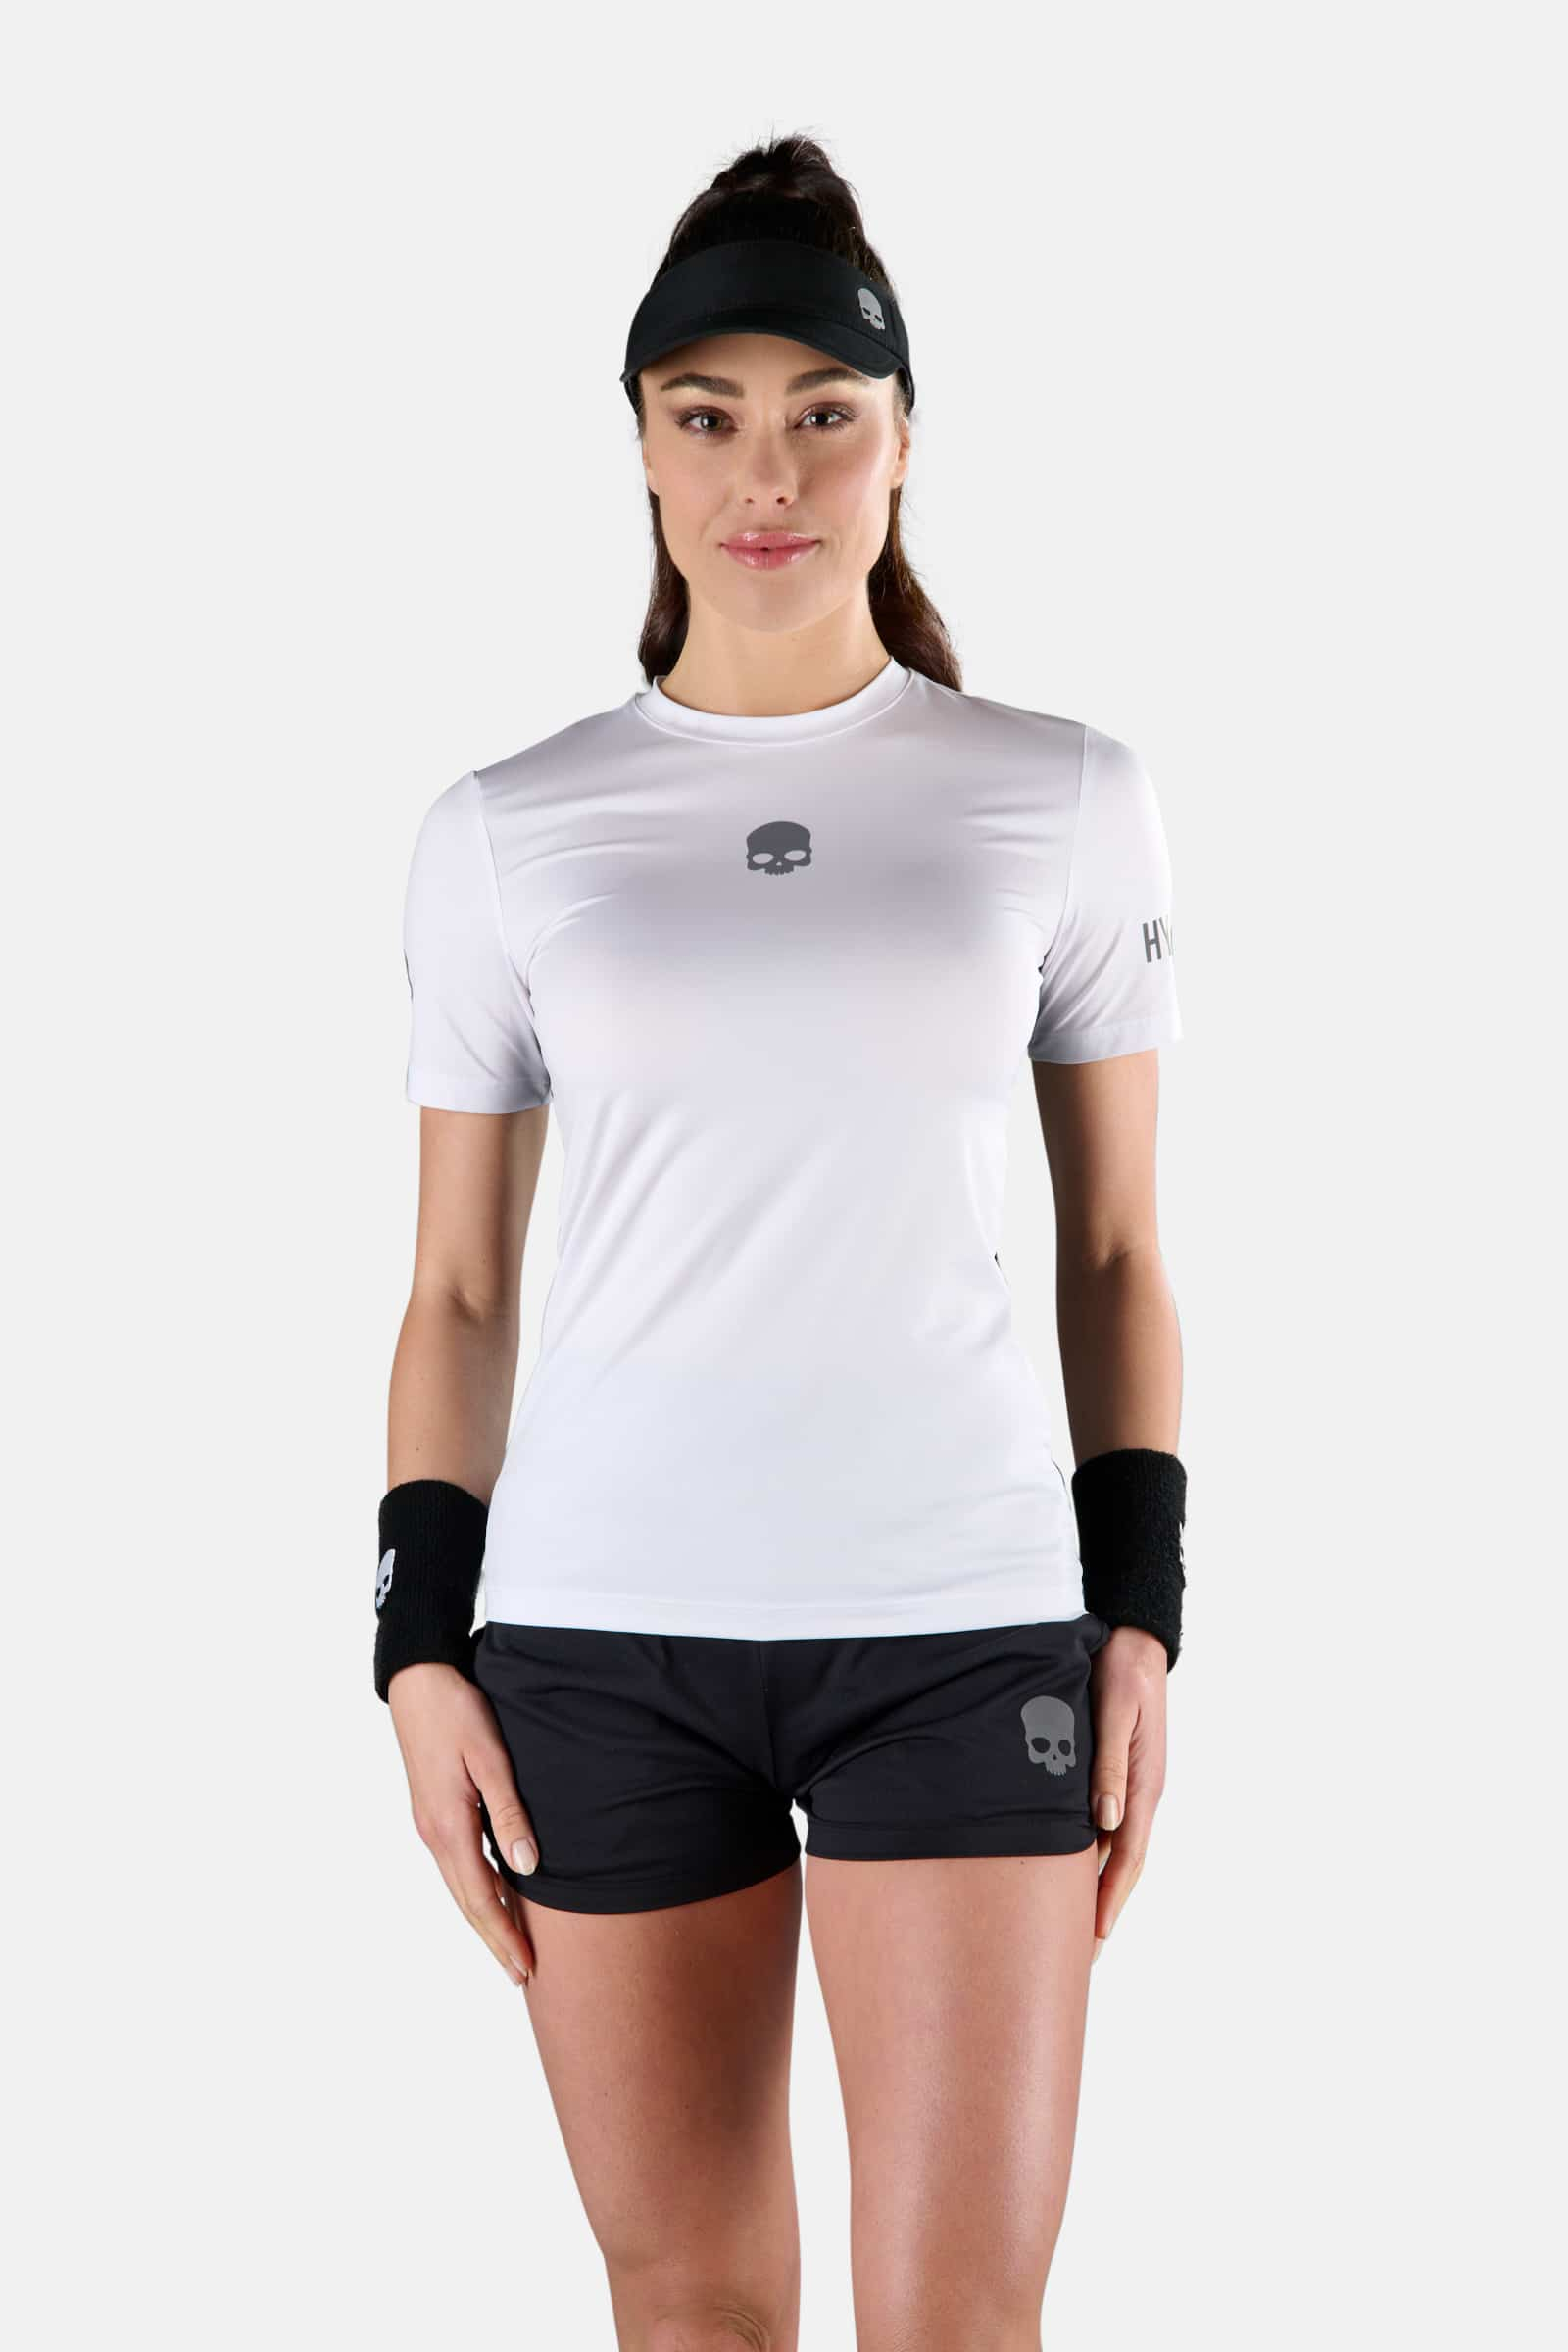 T-SHIRT TECNICA PANTHER - WHITE,GREY - Abbigliamento sportivo | Hydrogen